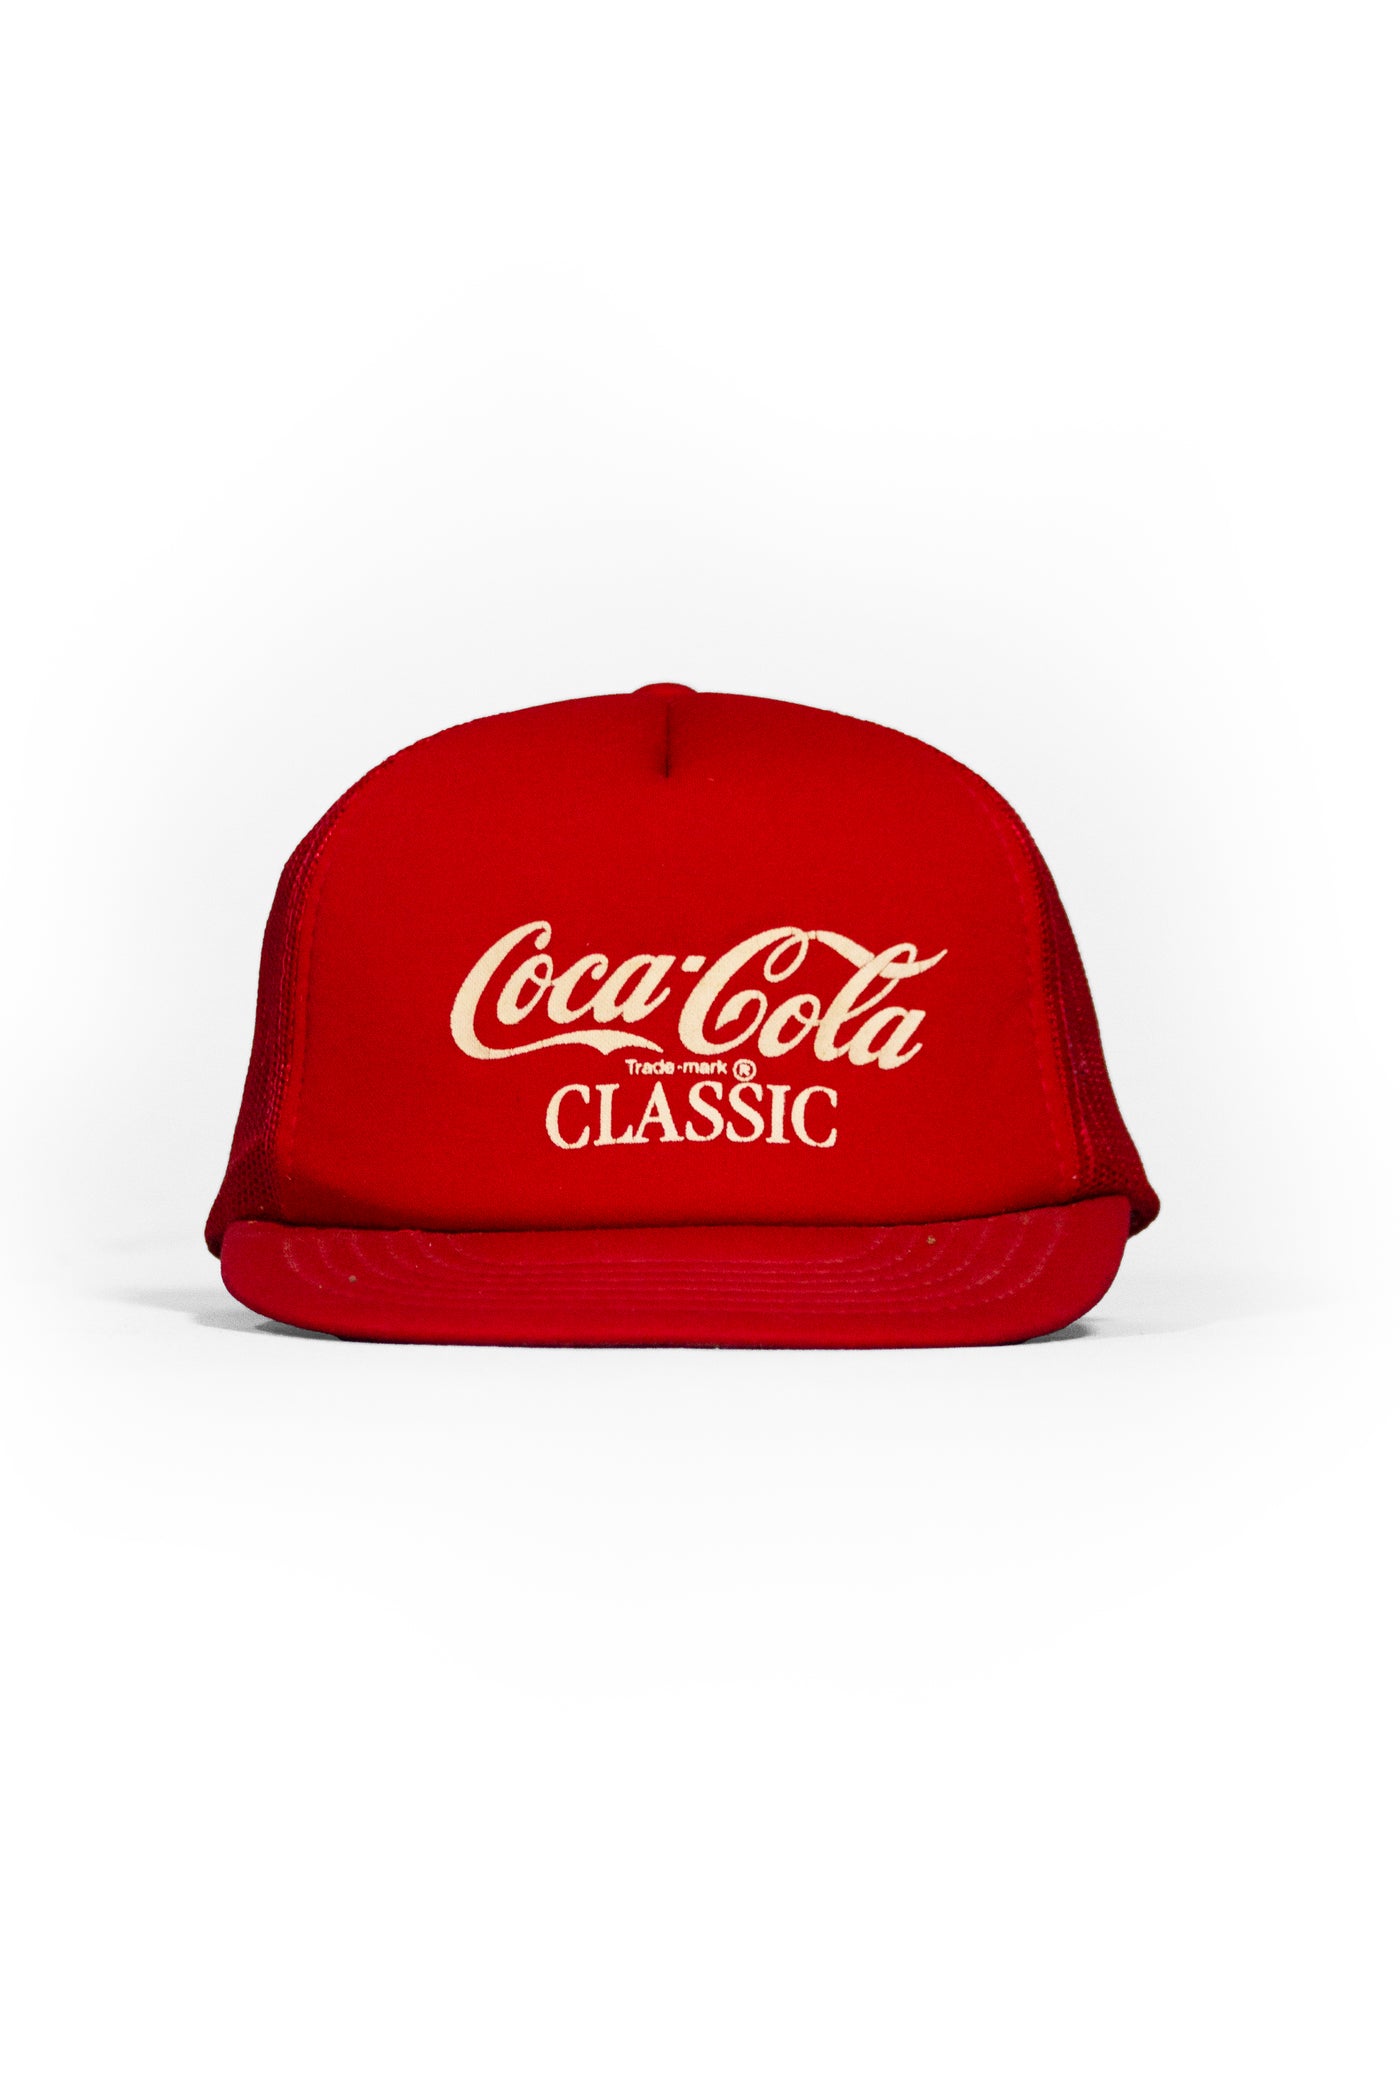 Vintage 80s Coca Cola Trucker Hat